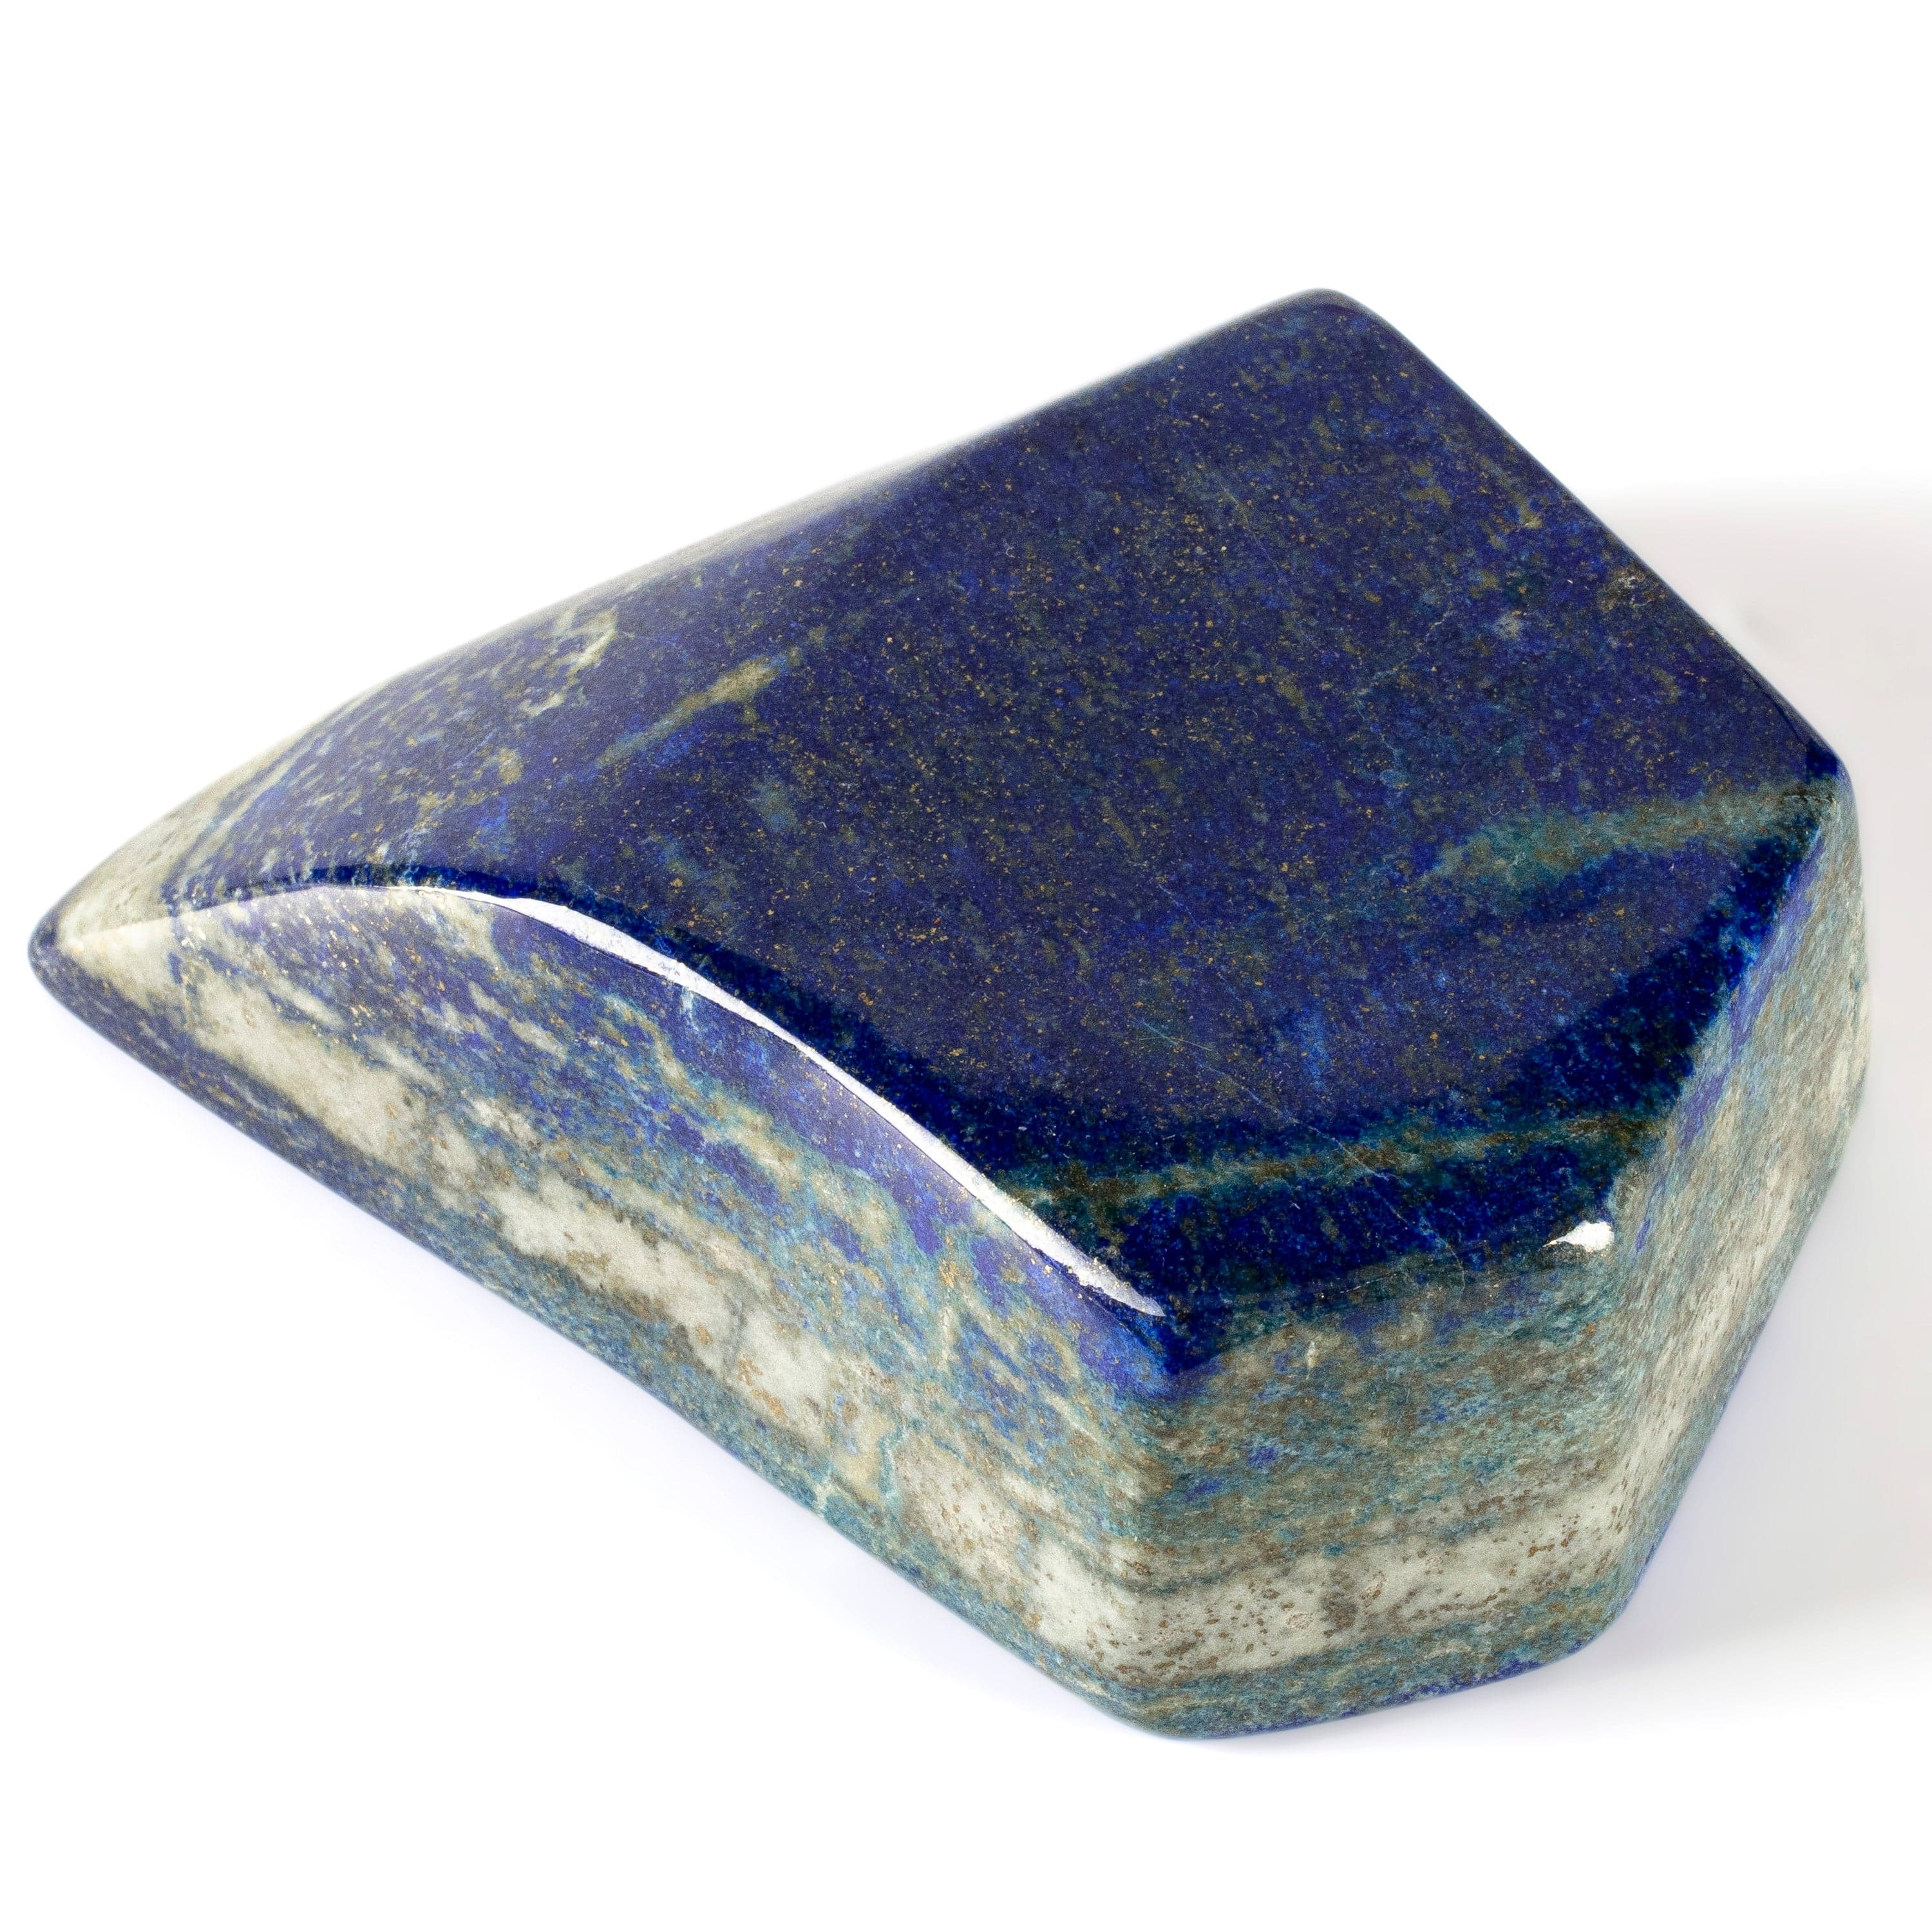 Kalifano Lapis Lapis Lazuli Freeform from Afghanistan - 6" / 1,290 grams LP1300.005